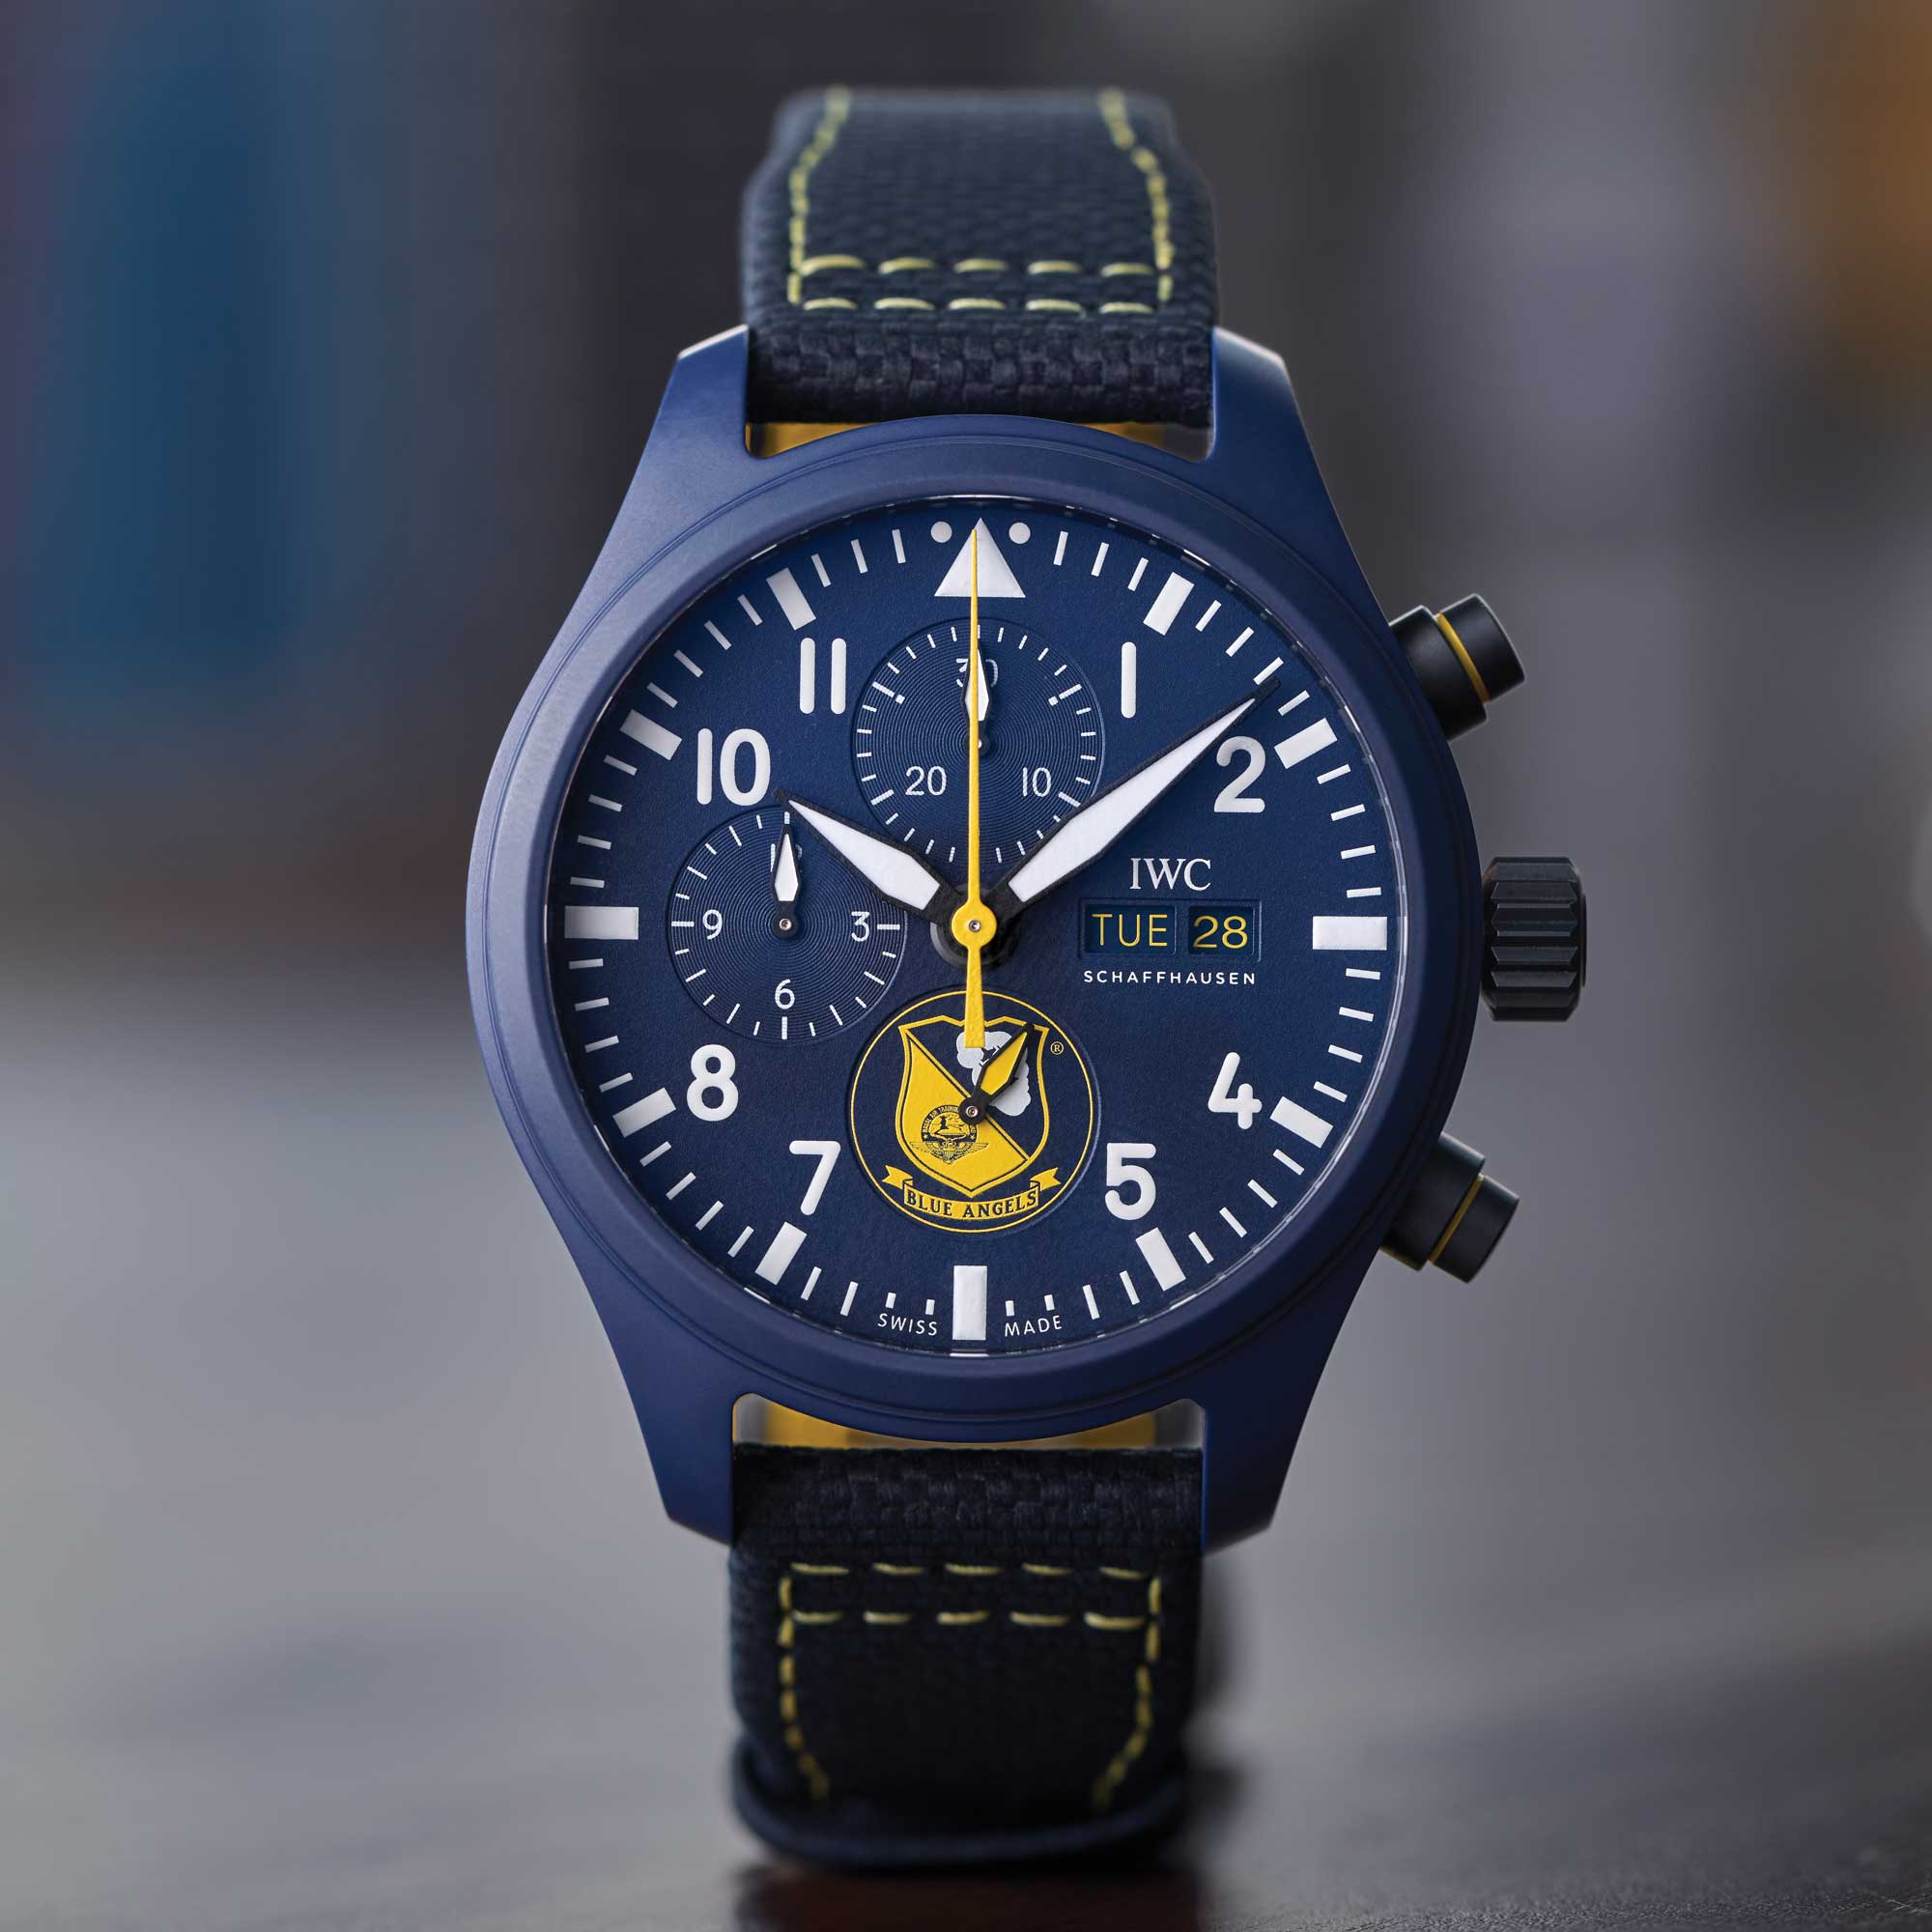 Pilot’s Watch Chronograph Edition “Blue Angels”